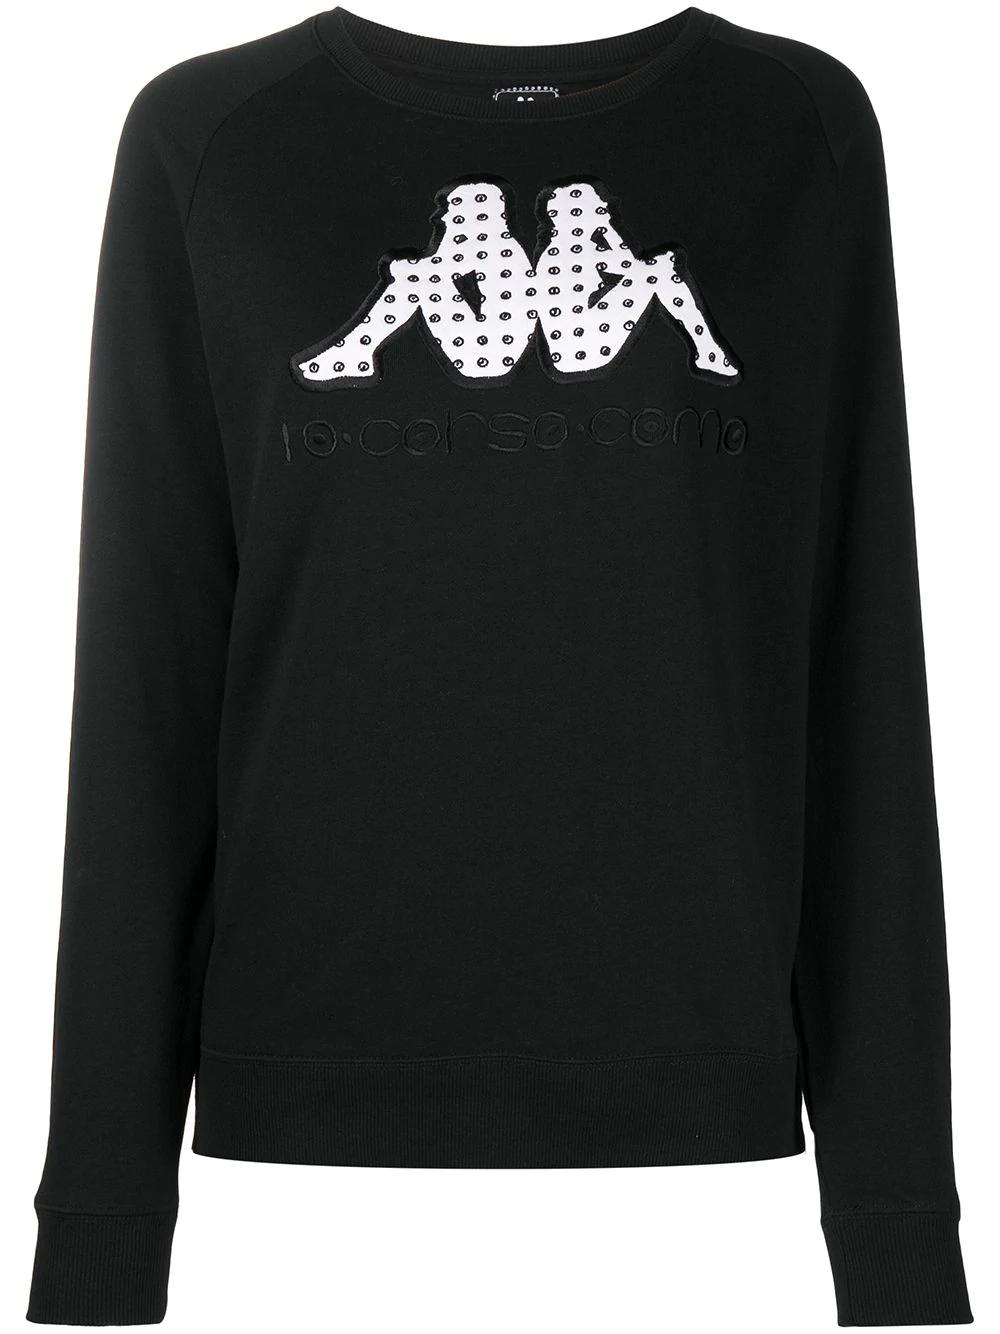 x Kappa logo-embroidered sweatshirt by 10 CORSO COMO